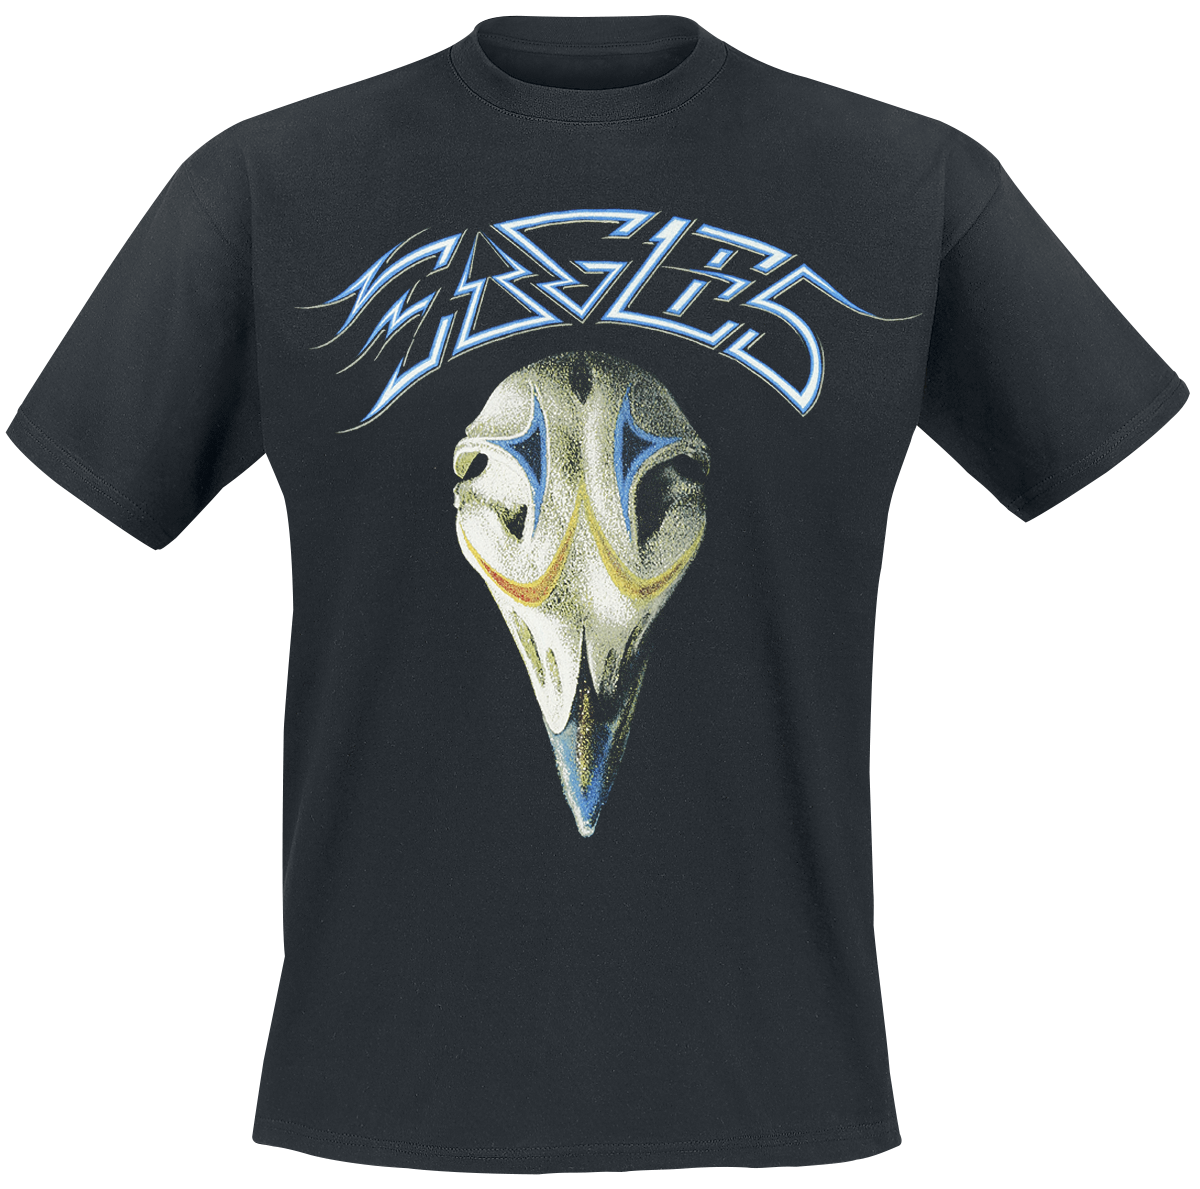 Eagles - Greatest Hits - T-Shirt - black image